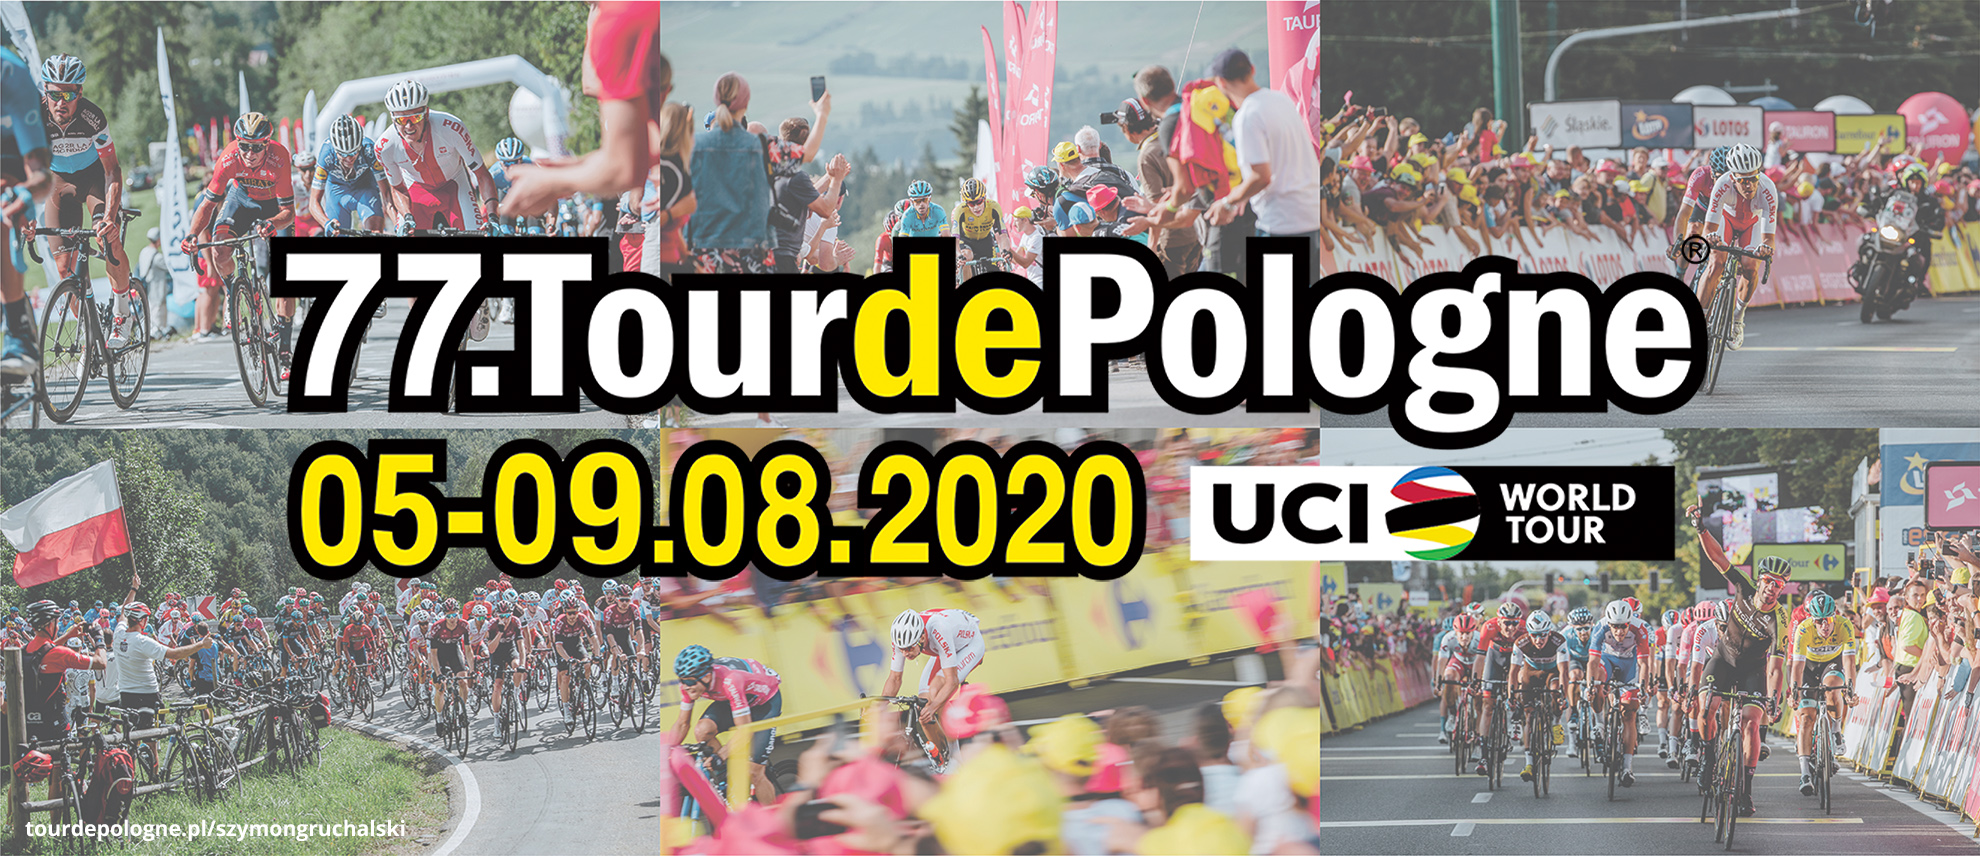 DRUTEX oficiálním sponzorem Tour de Pologne